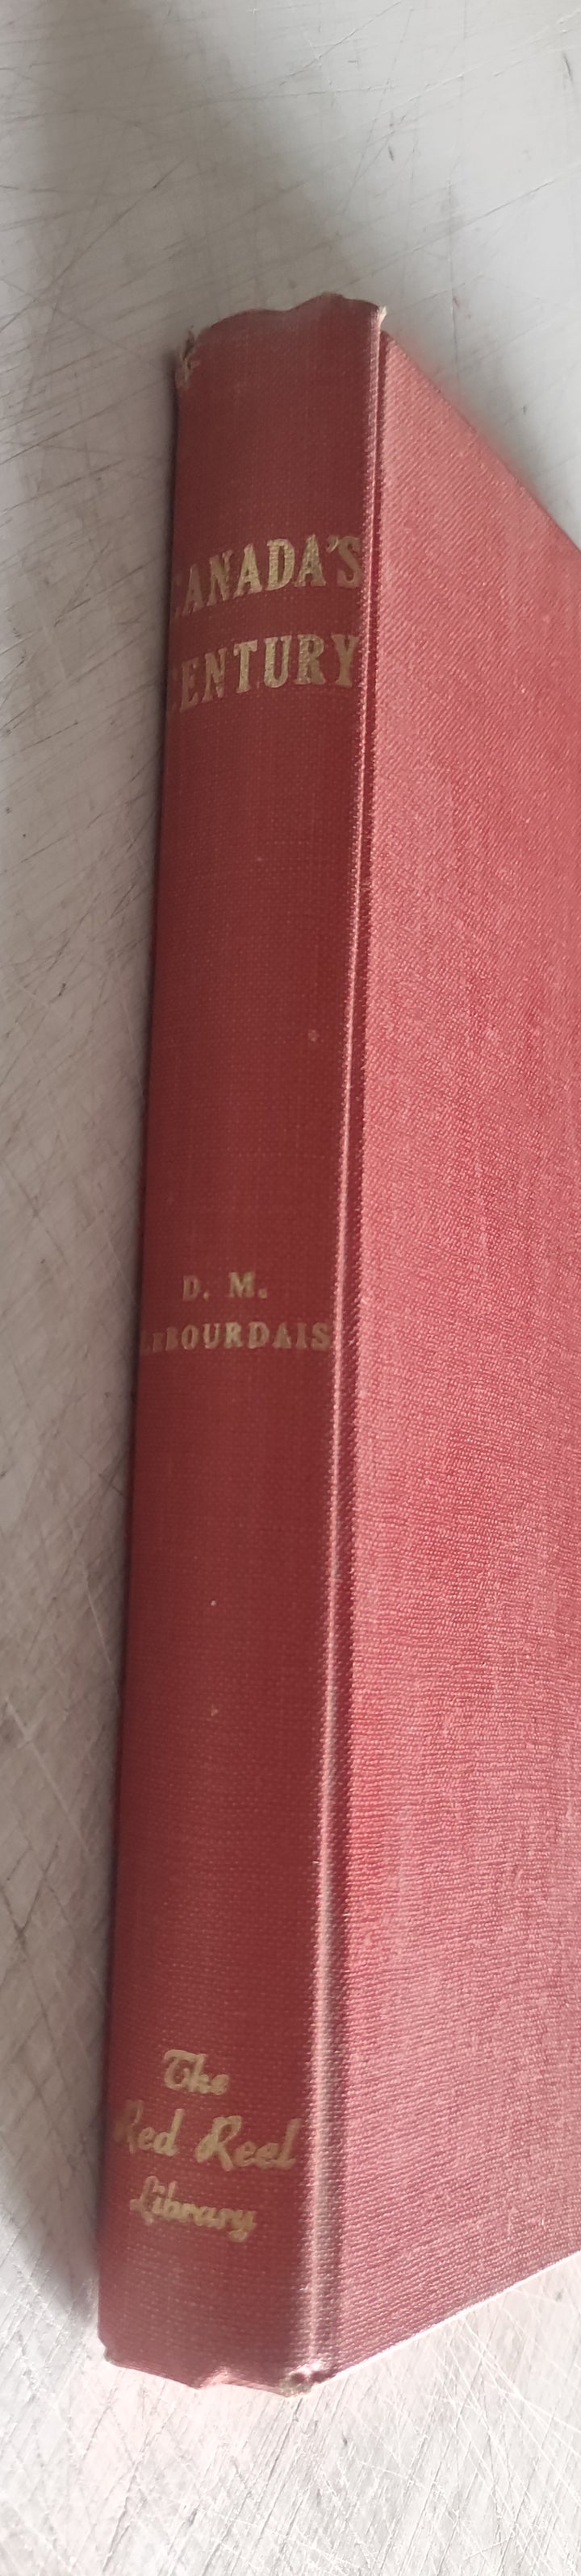 Canada's Century by D.M.LeBourdais (Vintage Hardcover Book 1951)